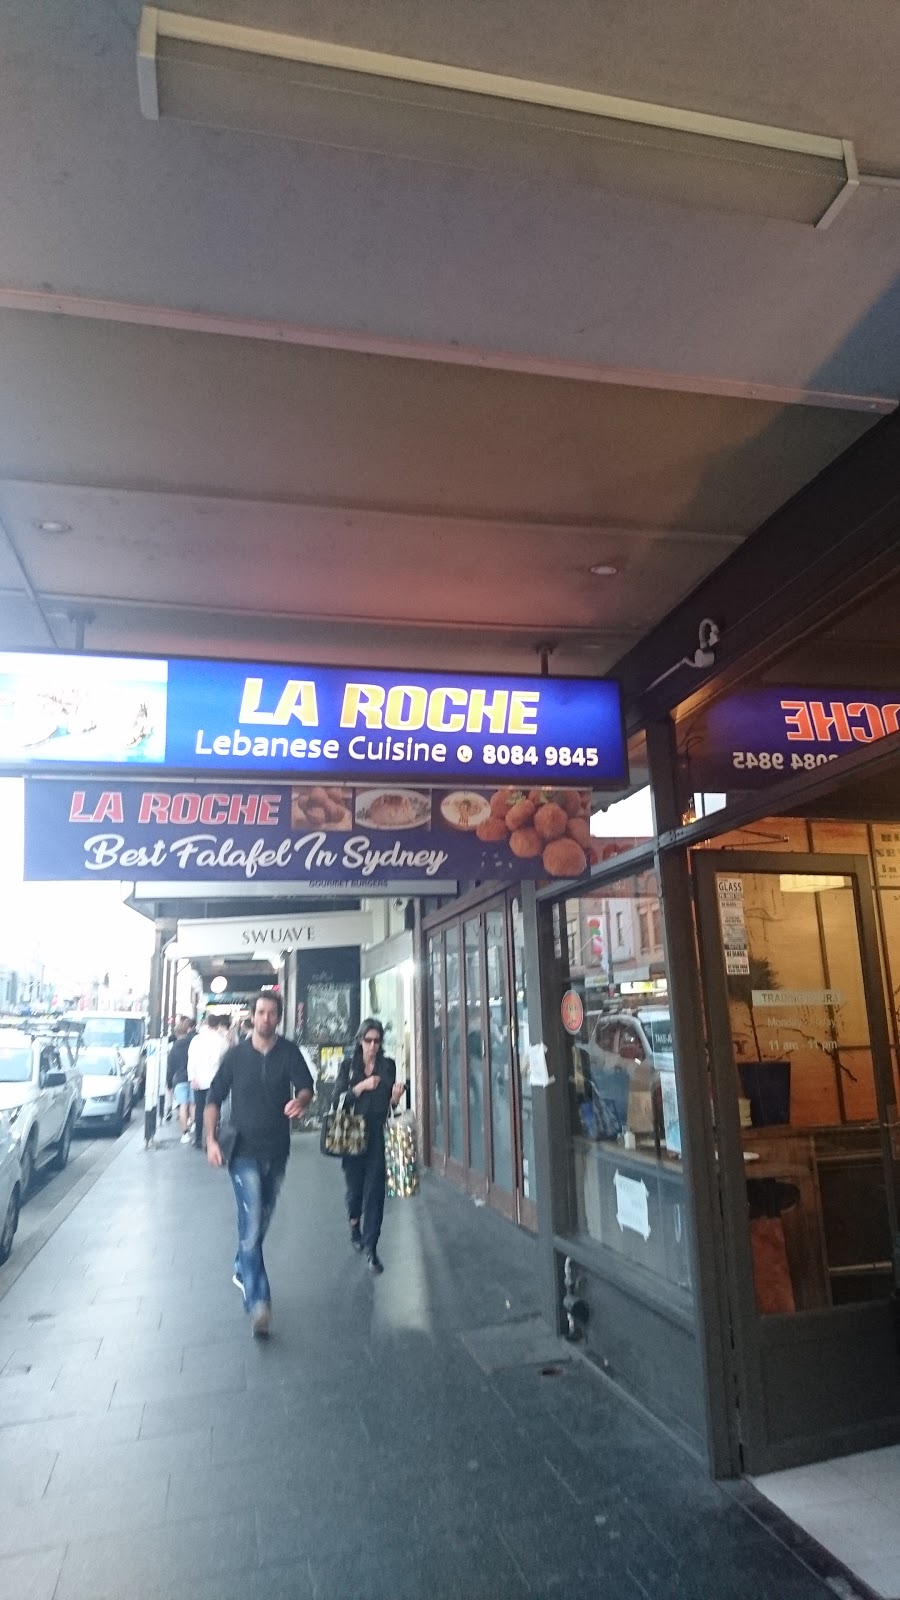 LA ROCHE Lebanese Cuisine | restaurant | 234 King St, Newtown NSW 2042, Australia | 0280849845 OR +61 2 8084 9845